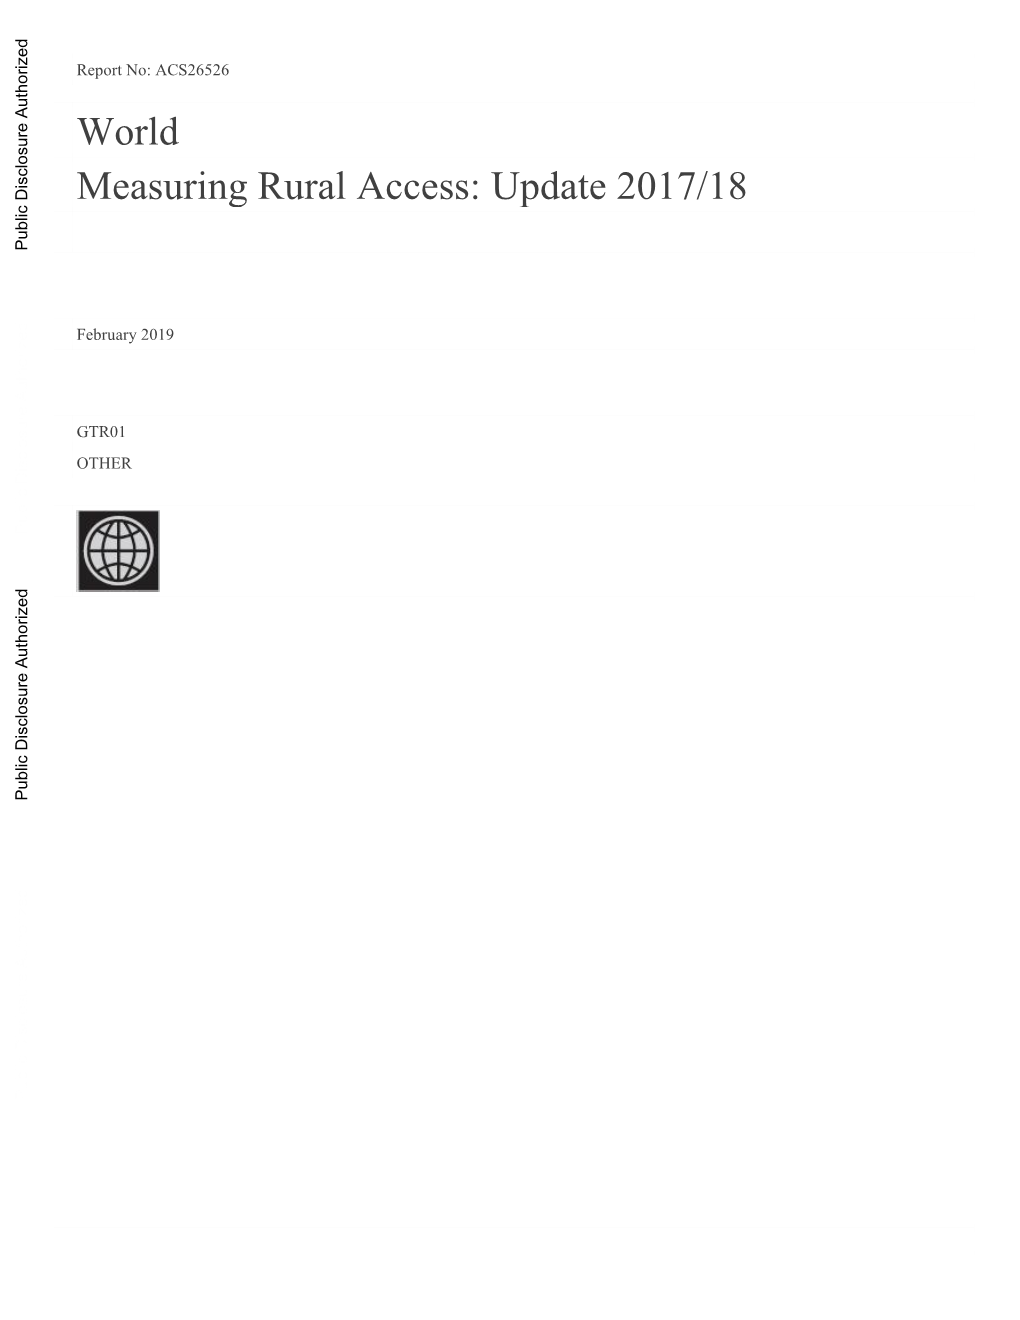 World Measuring Rural Access: Update 2017/18